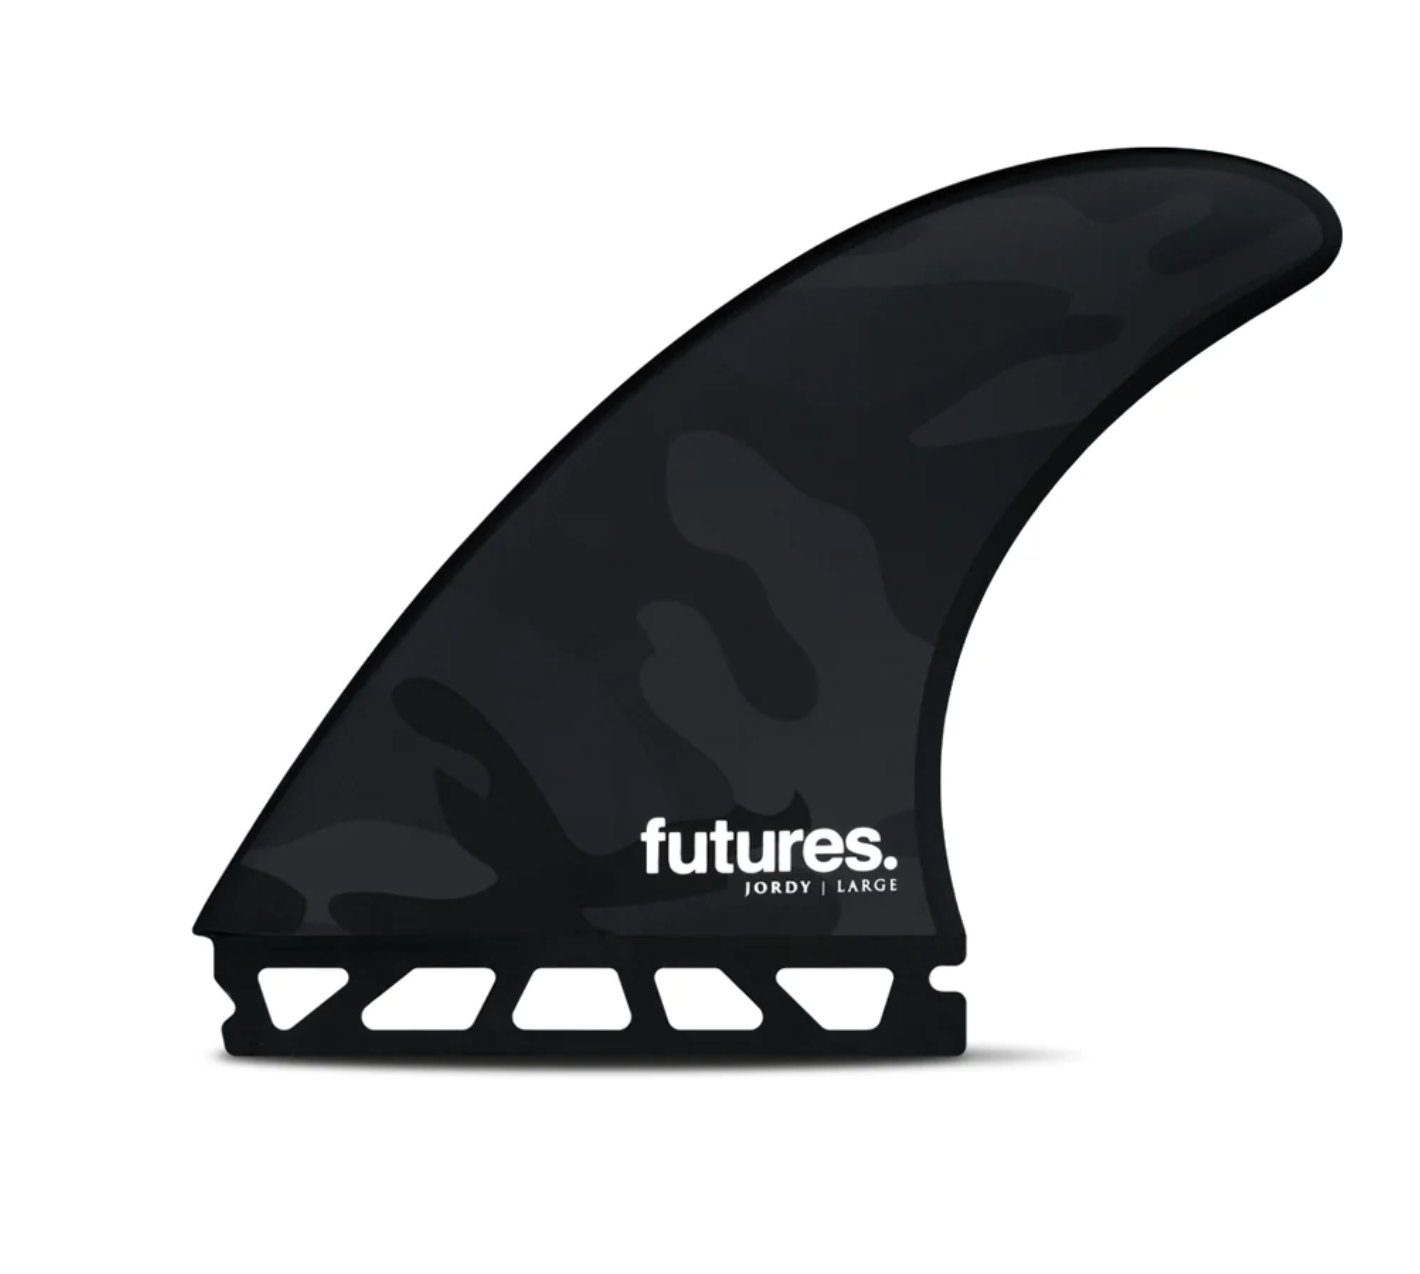 Futures Jordy Large HC Thruster - Black White Camo